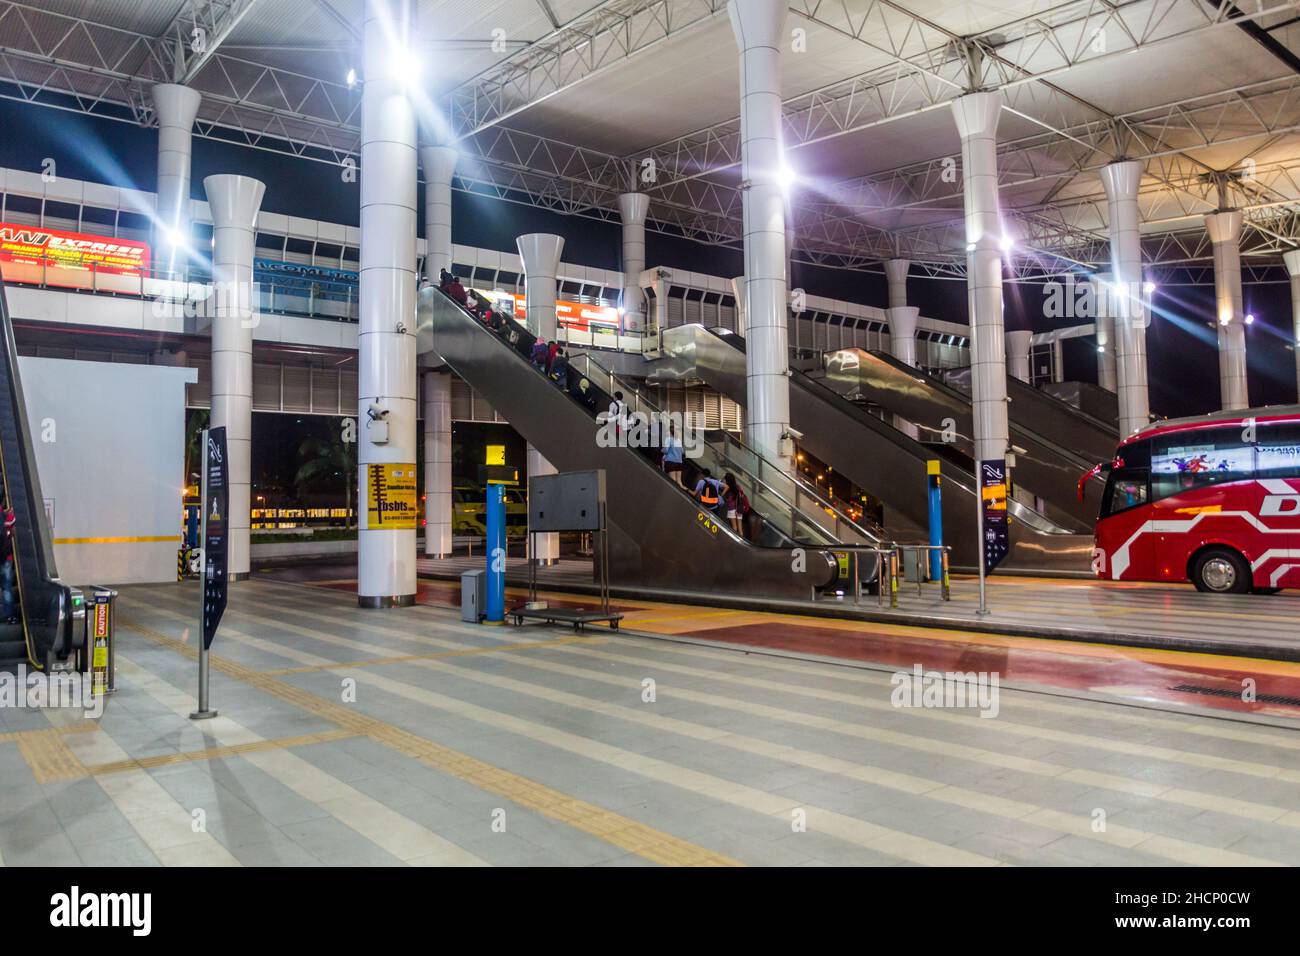 KUALA LUMPUR, MALAYSIA - MARCH 13, 2018: Platforms of Terminal Bersepadu Selatan bus station in Kuala Lumpur, Malaysia. Stock Photo